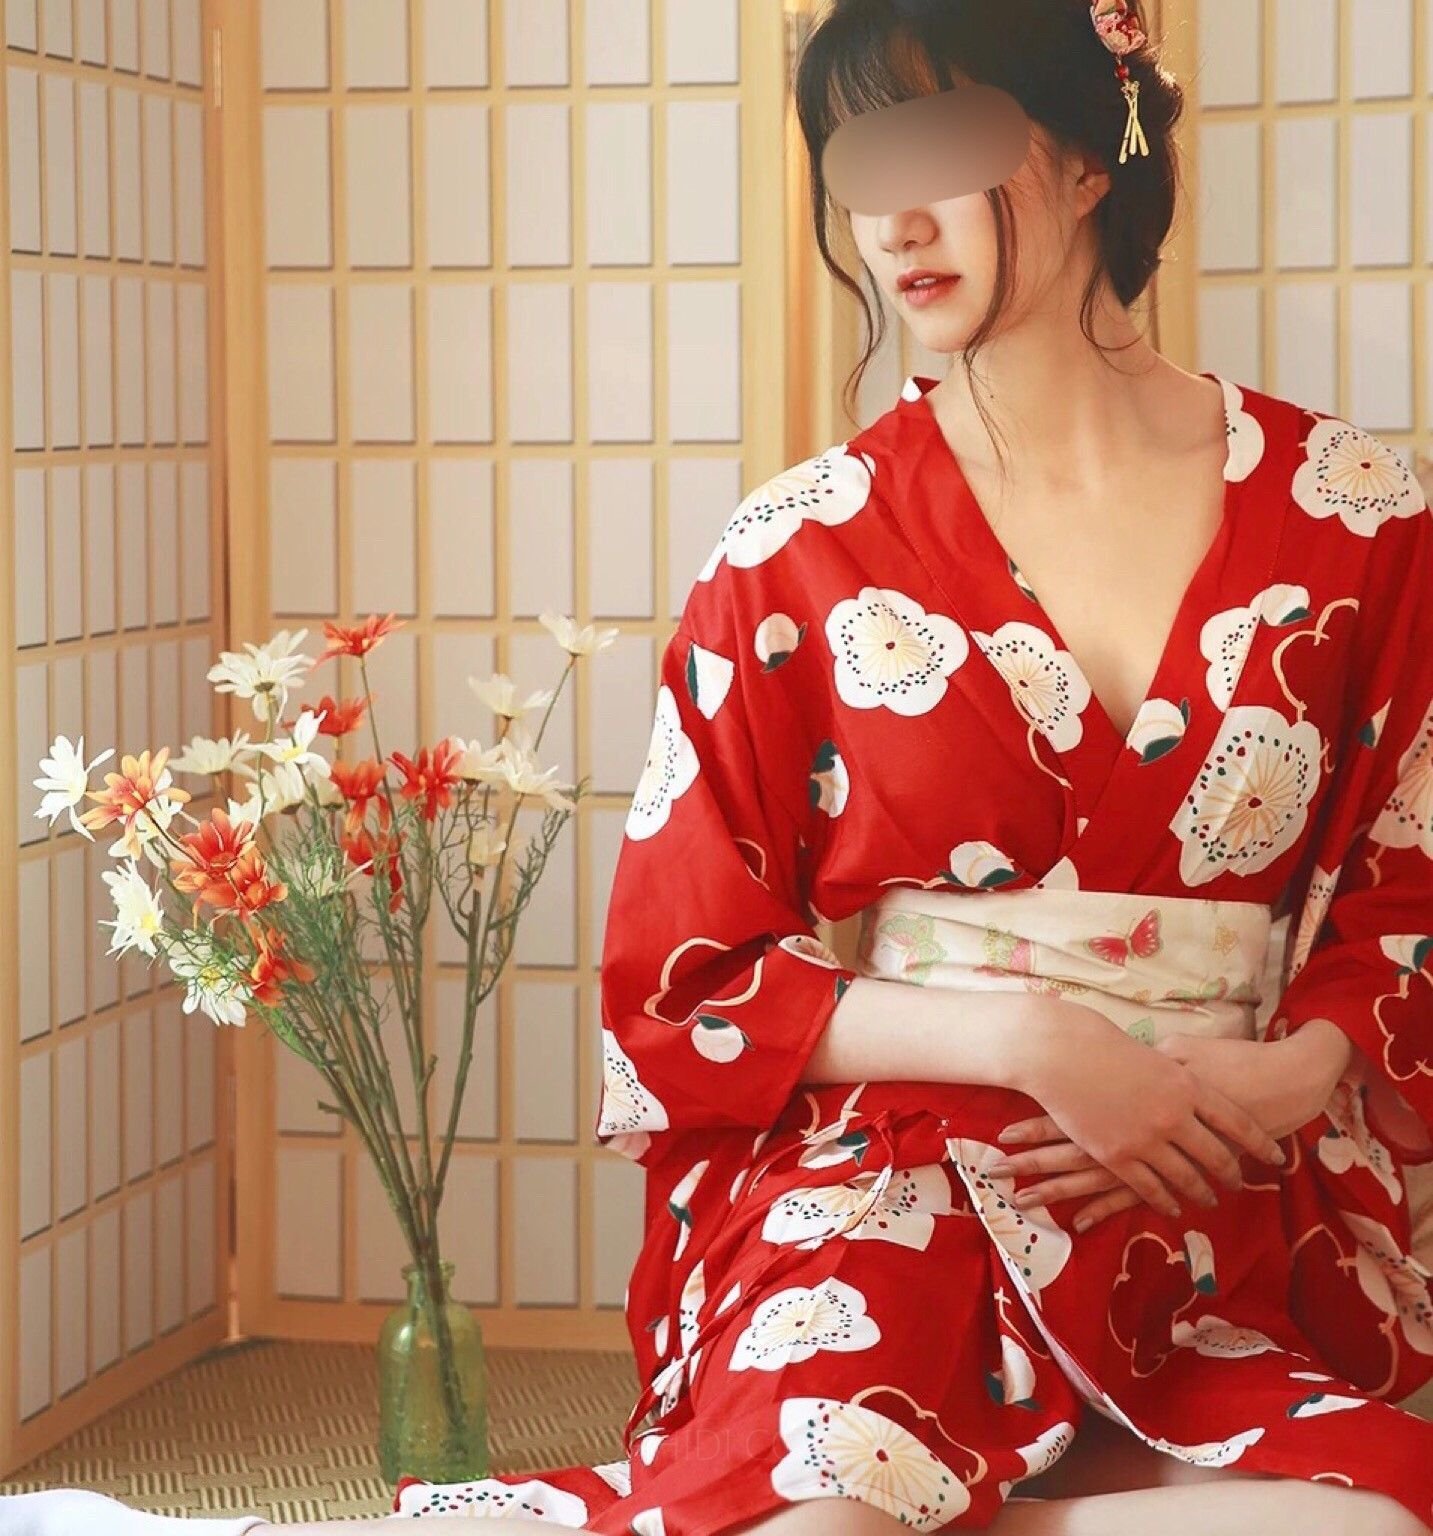 Best Japan Haus - Japanparadies in Munich - model photo Mika